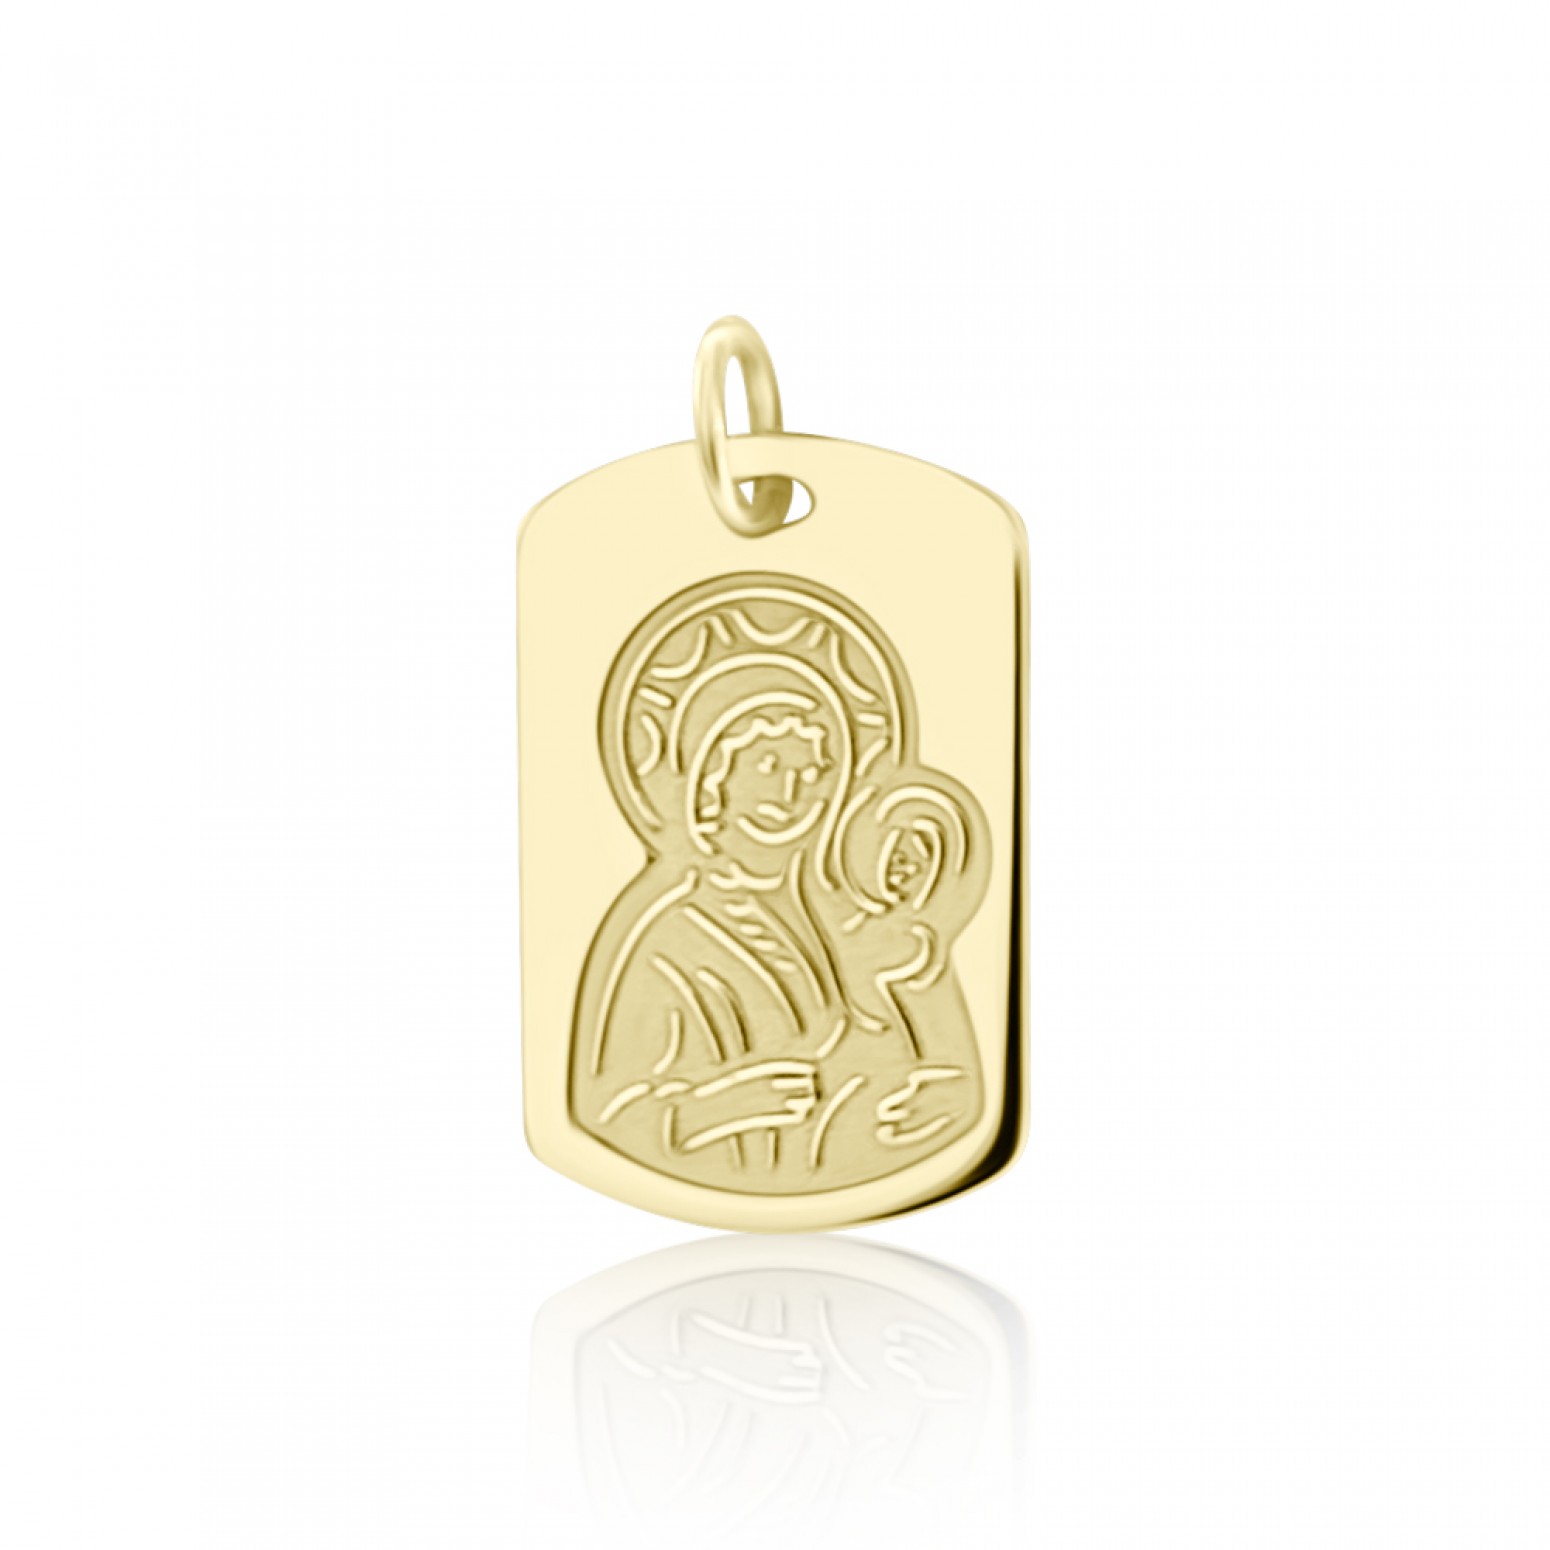 Babies pendant K14 gold with Holy Mary, pm0190 BABIES Κοσμηματα - chrilia.gr